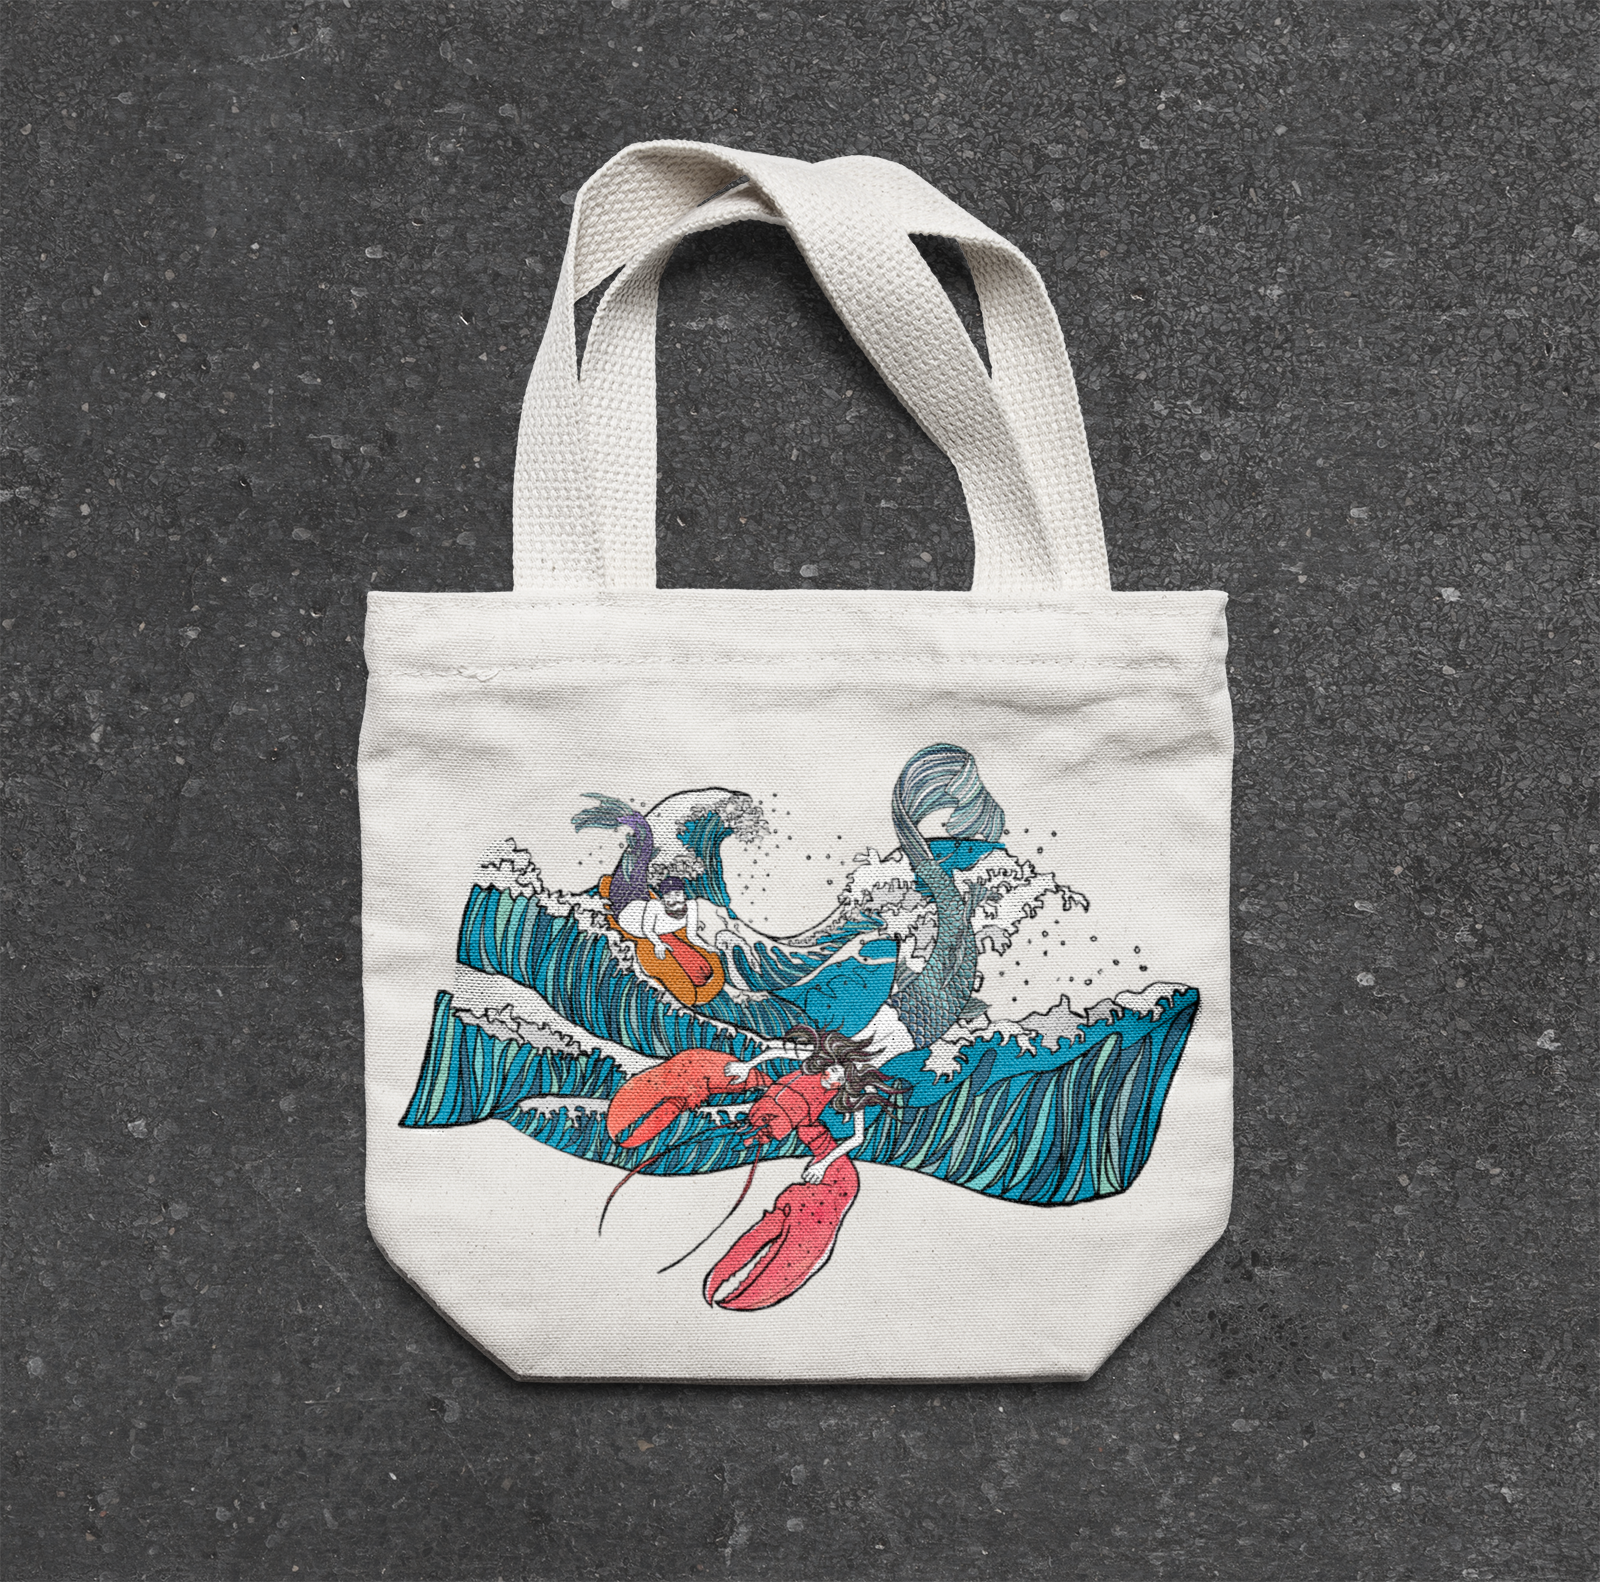 The Coney Island Mermaid Parade Poster Illustration: Tote Bag